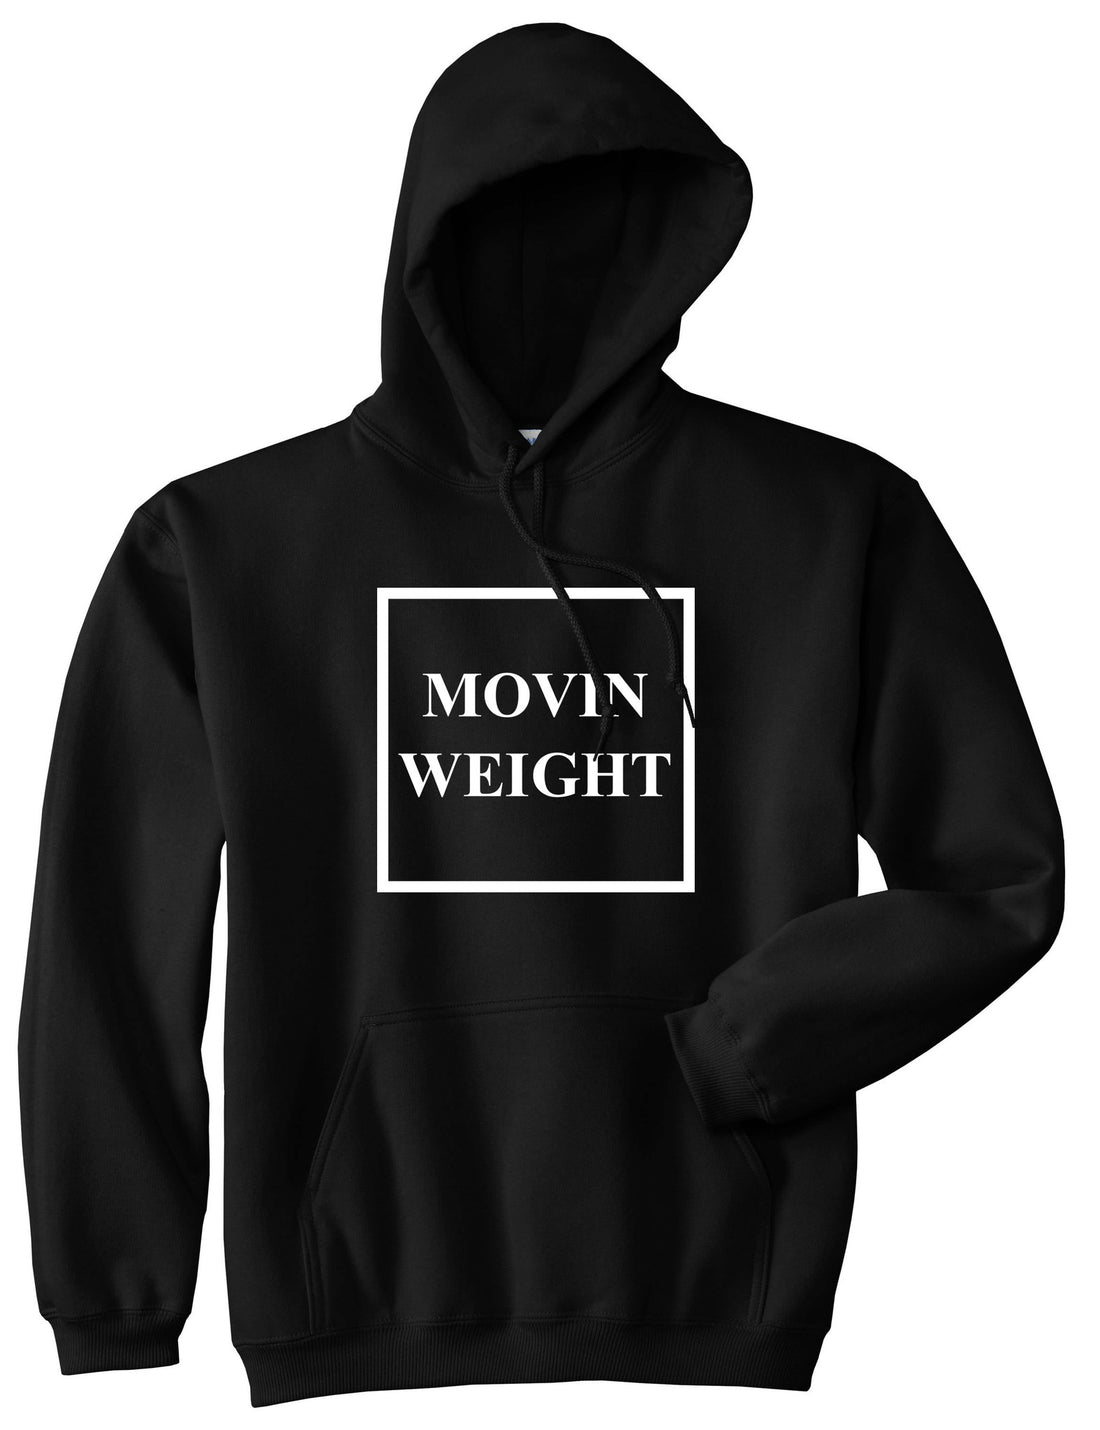 Movin Weight Hustler Pullover Hoodie Hoody in Black by Kings Of NY